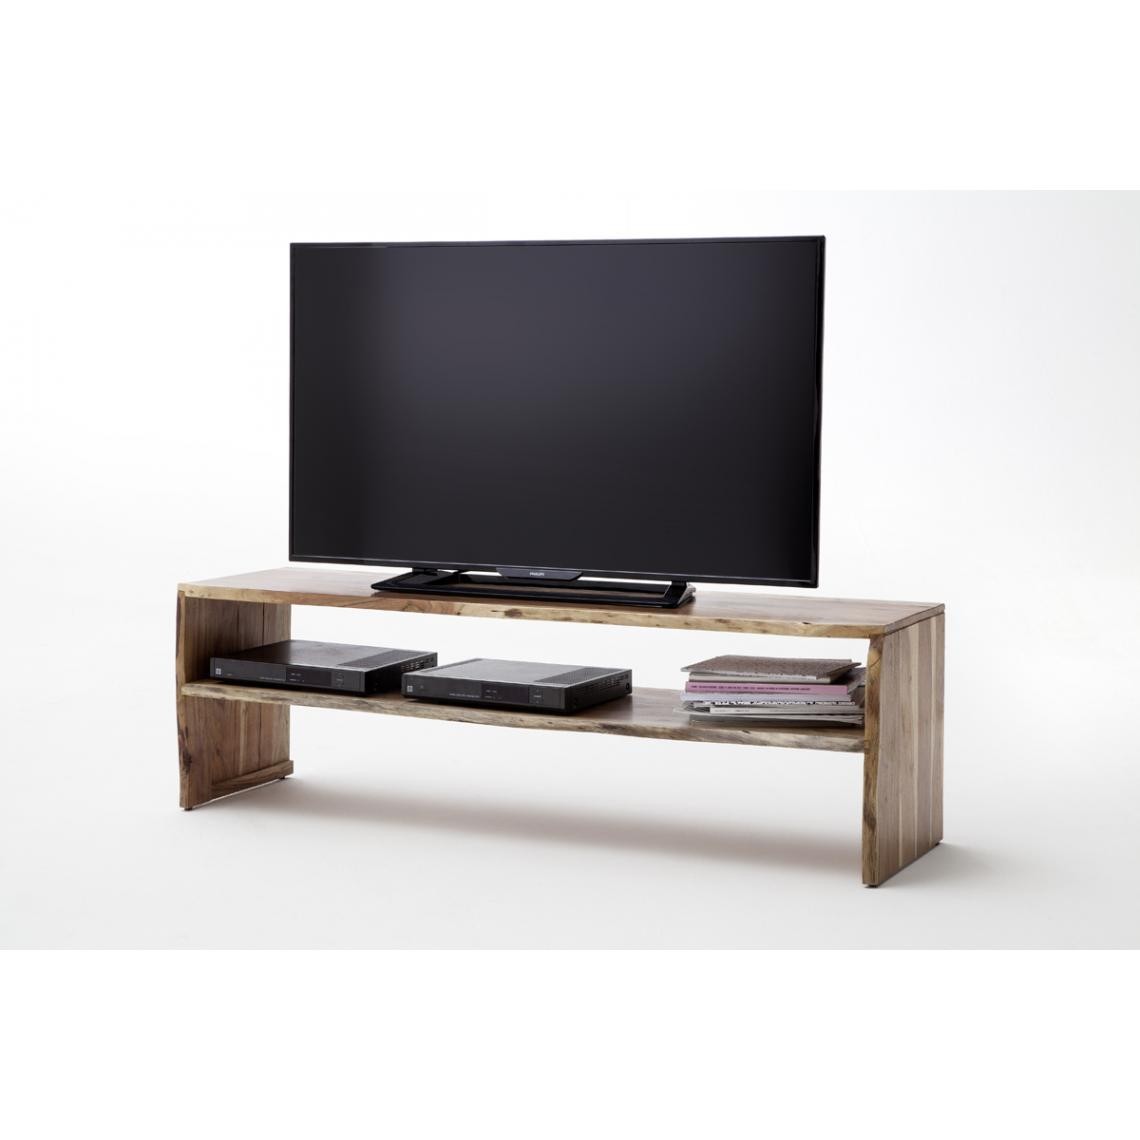 Pegane - Meuble TV en bois d'acacia massif coloris noyer - L145 x H45 x P40 cm - Meubles TV, Hi-Fi